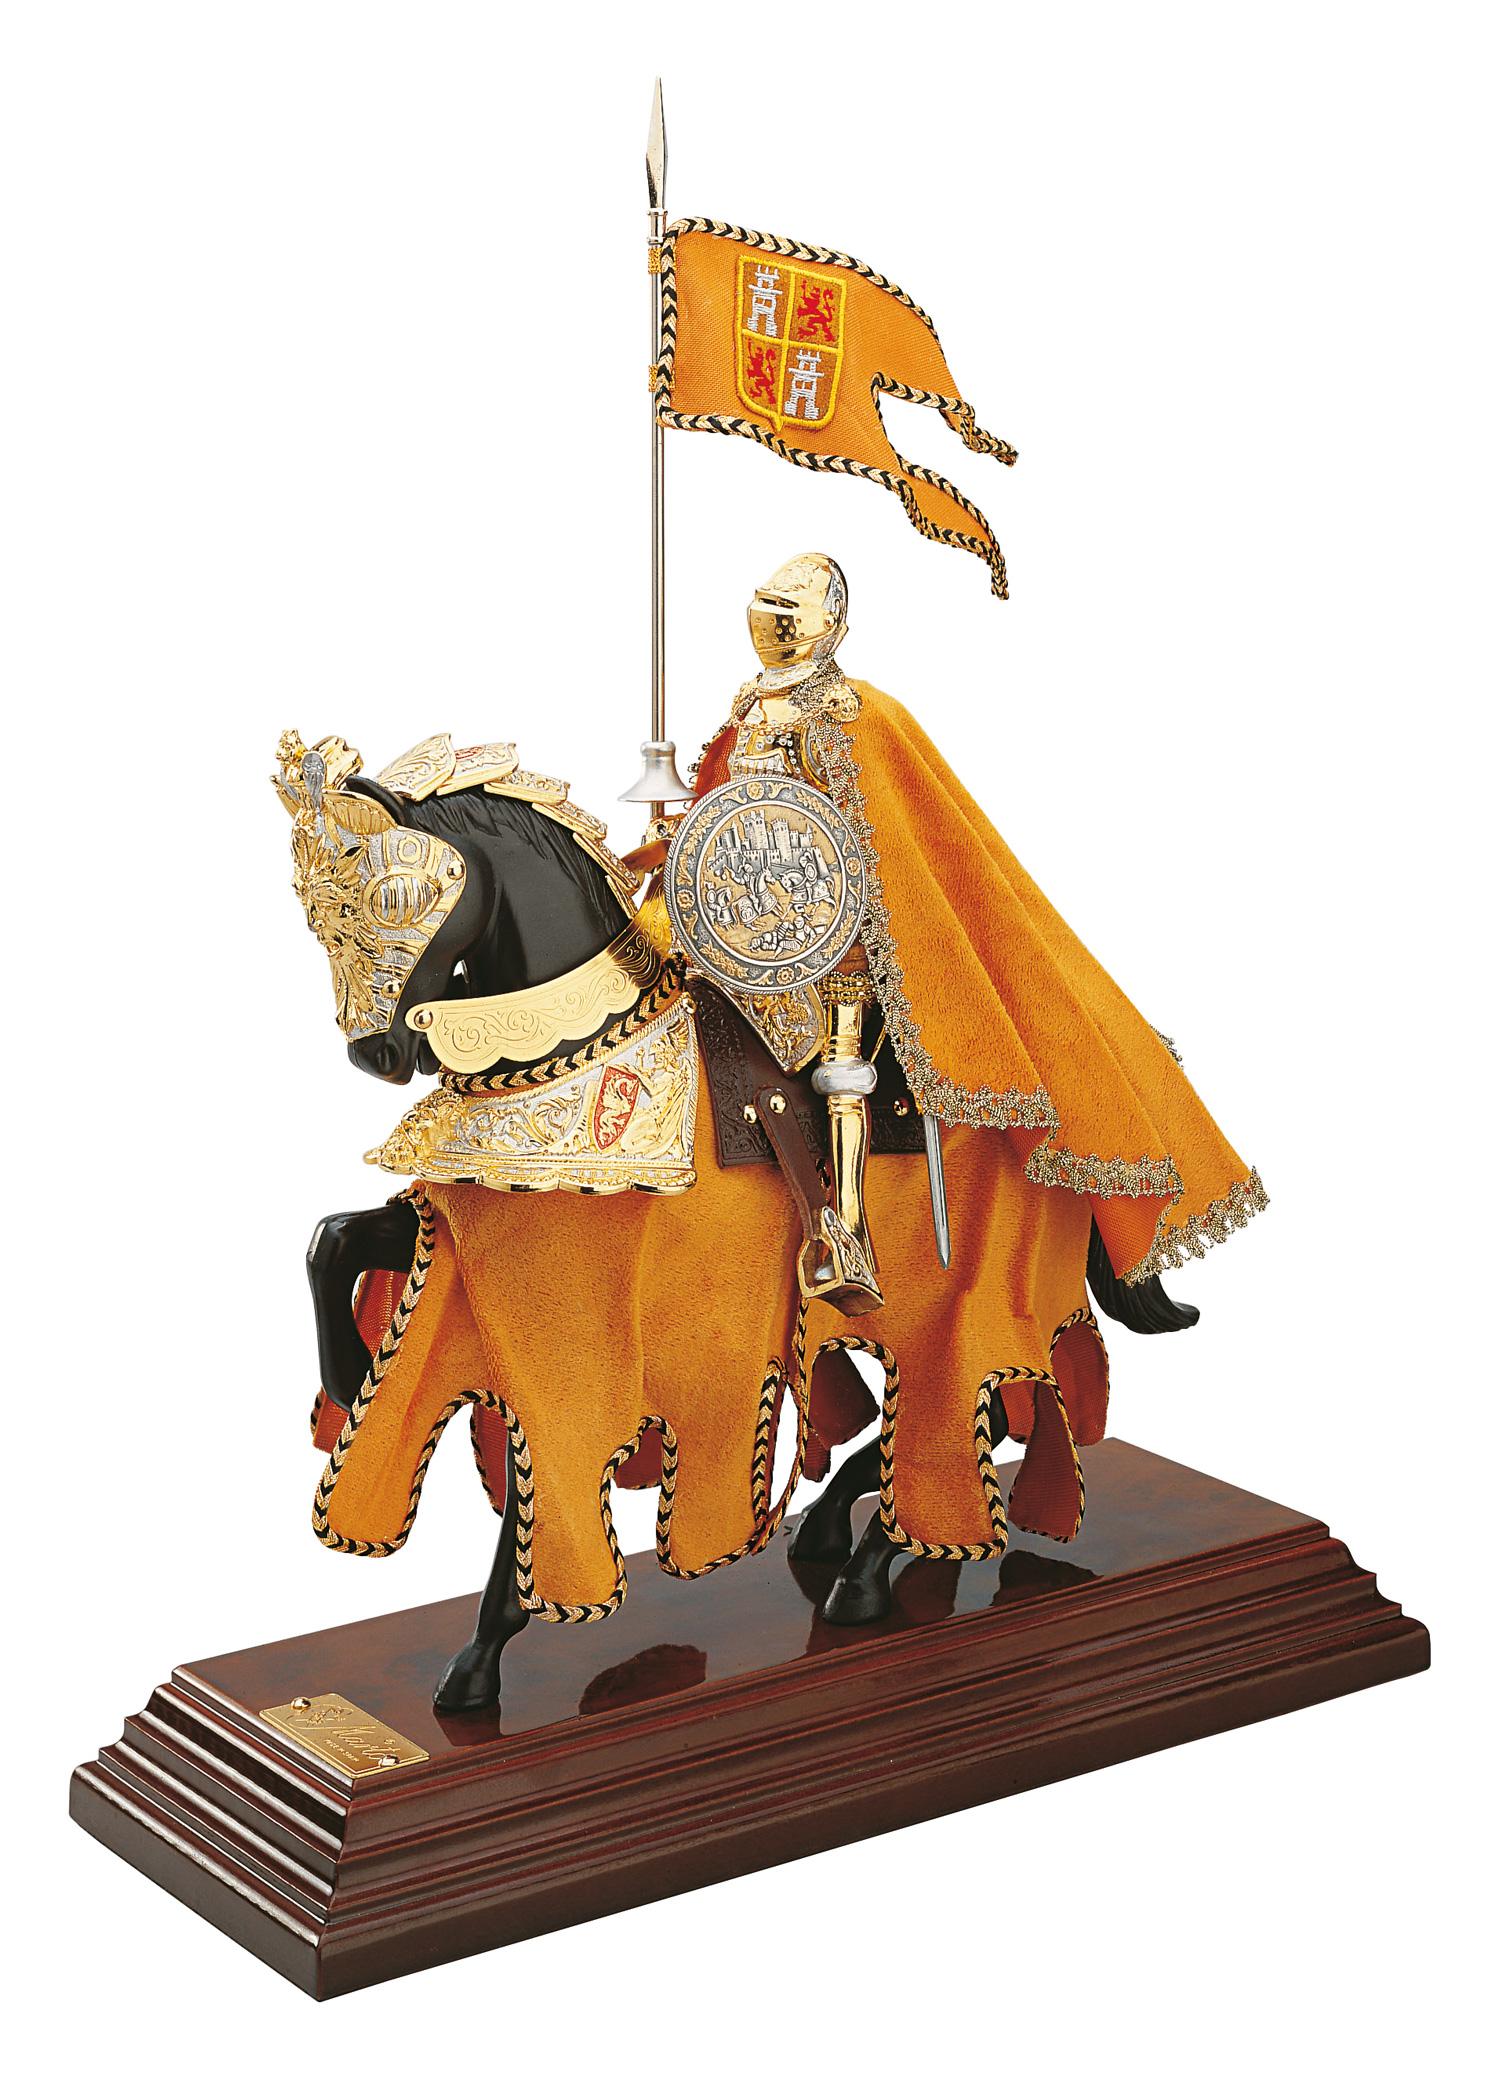 Miniatur Ritter El Cid auf Pferd, Marto